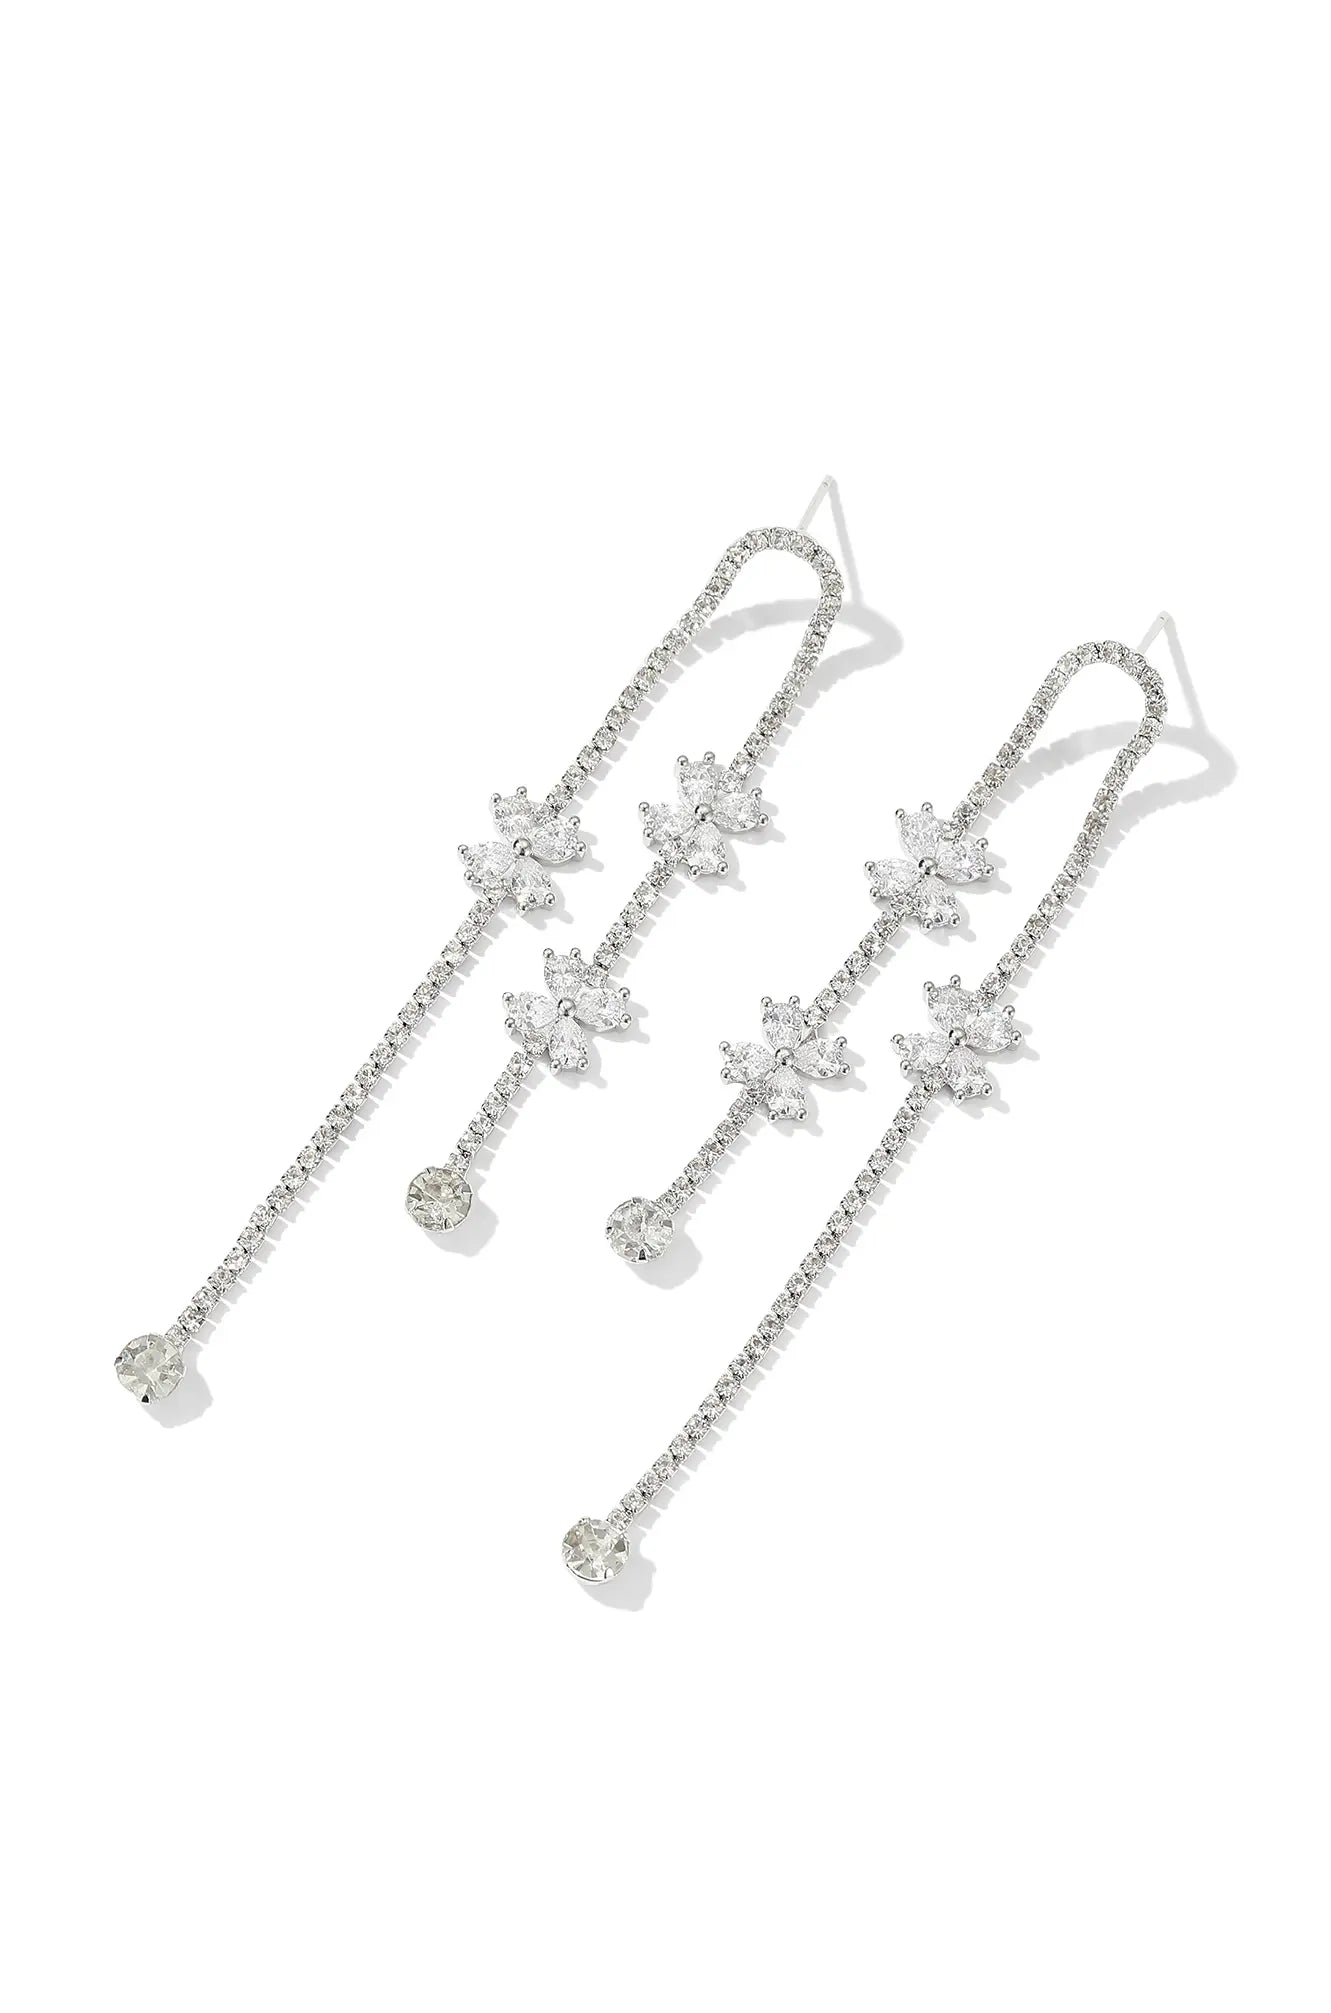 Dangling Bowknot Crystal Earrings